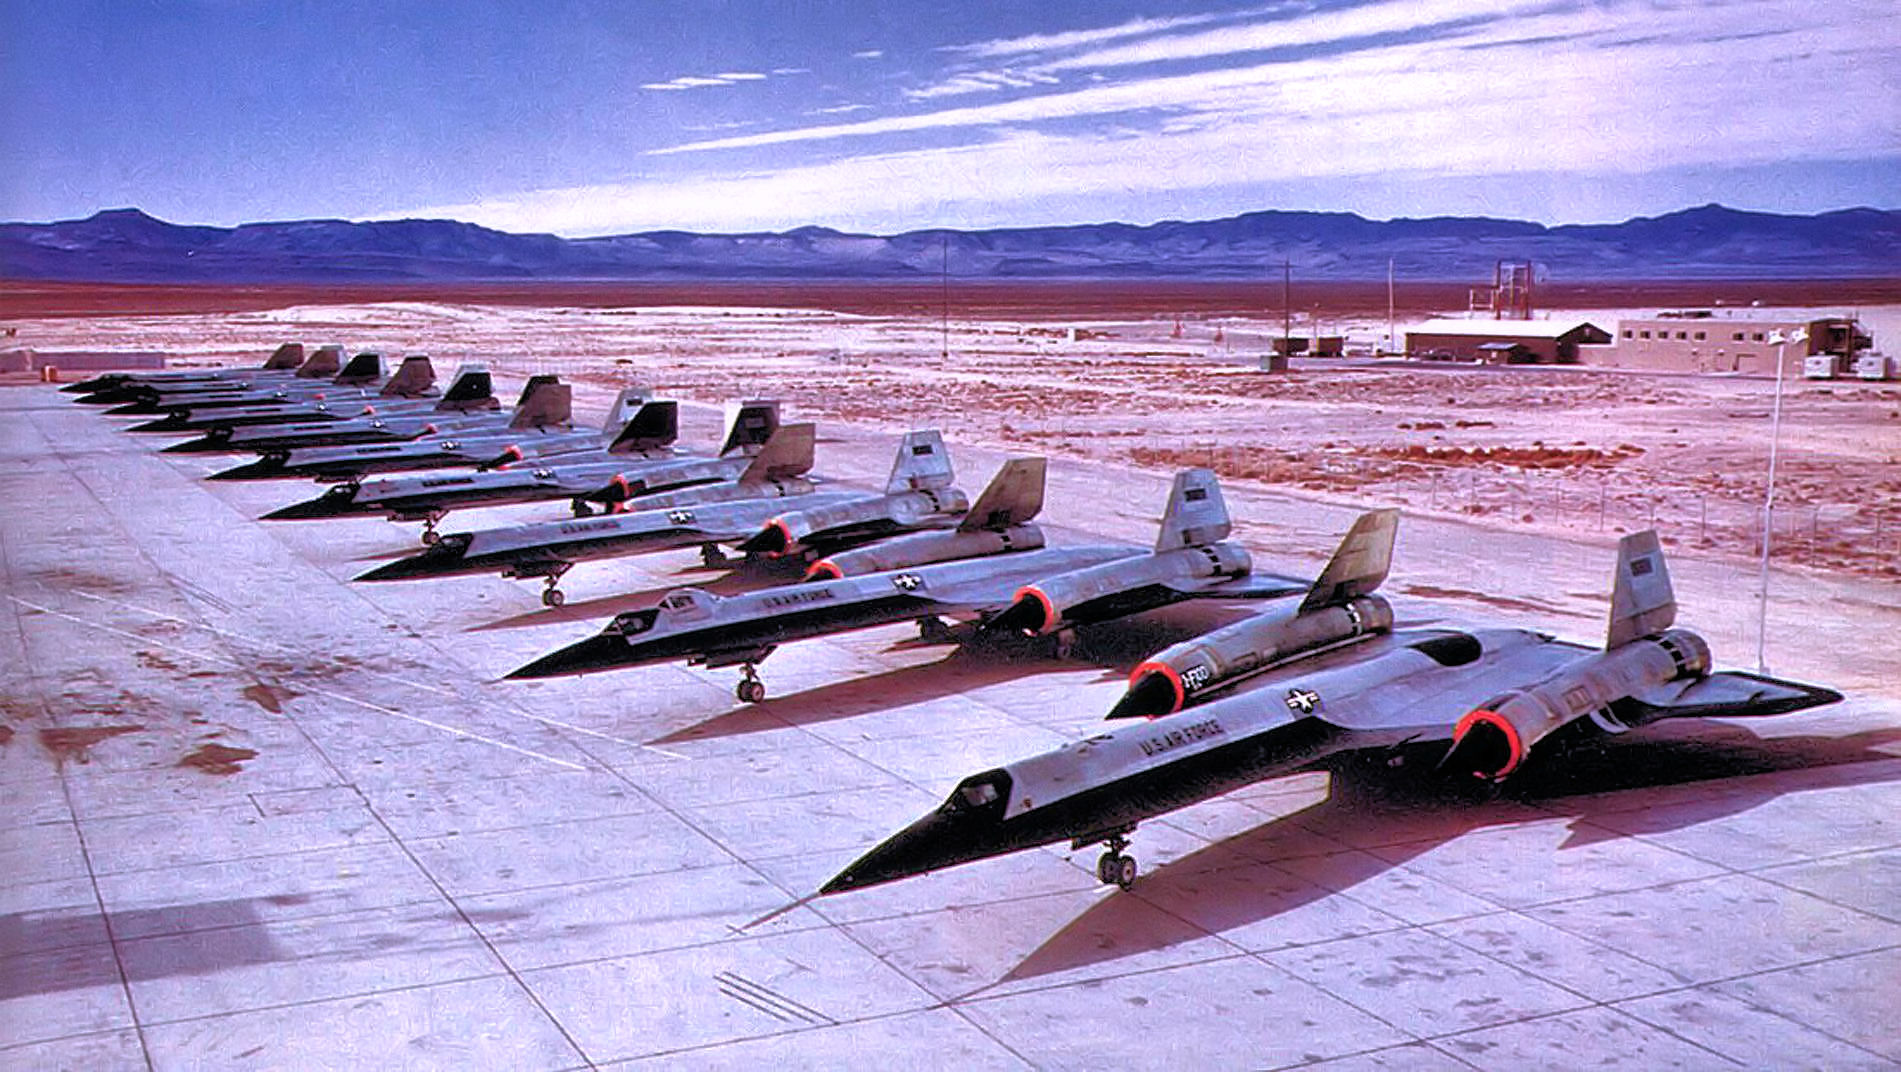 row of A-12 aircraft